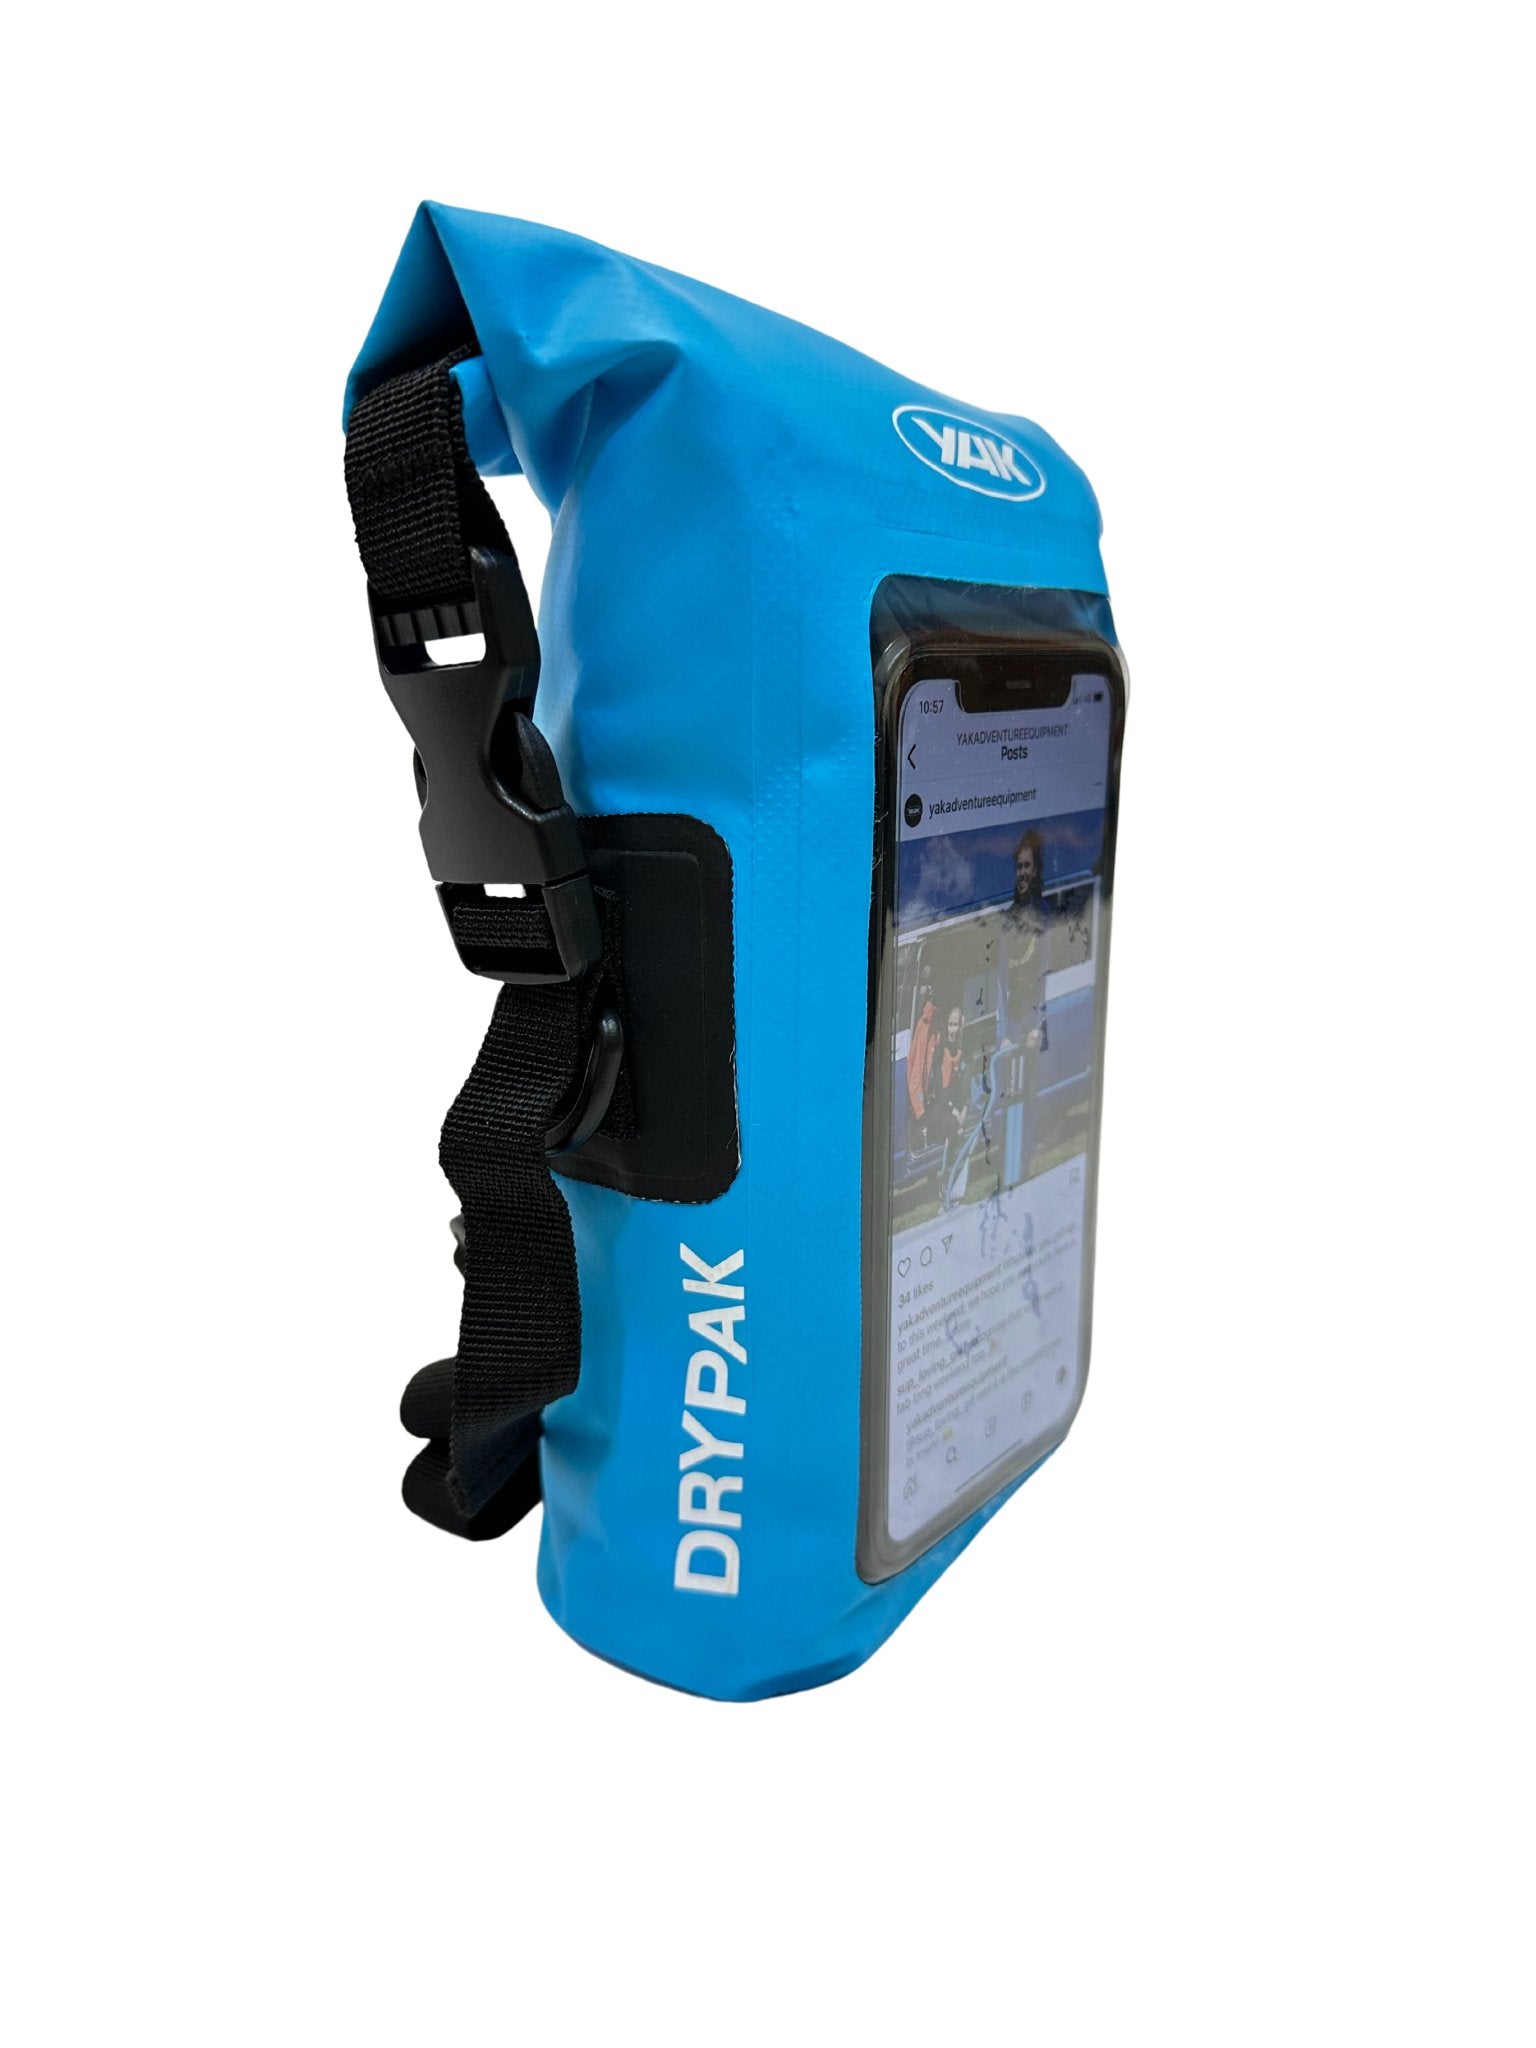 Yak Waterproof Phone Pouch - Worthing Watersports - 7003336 - Dry Bags - YAK